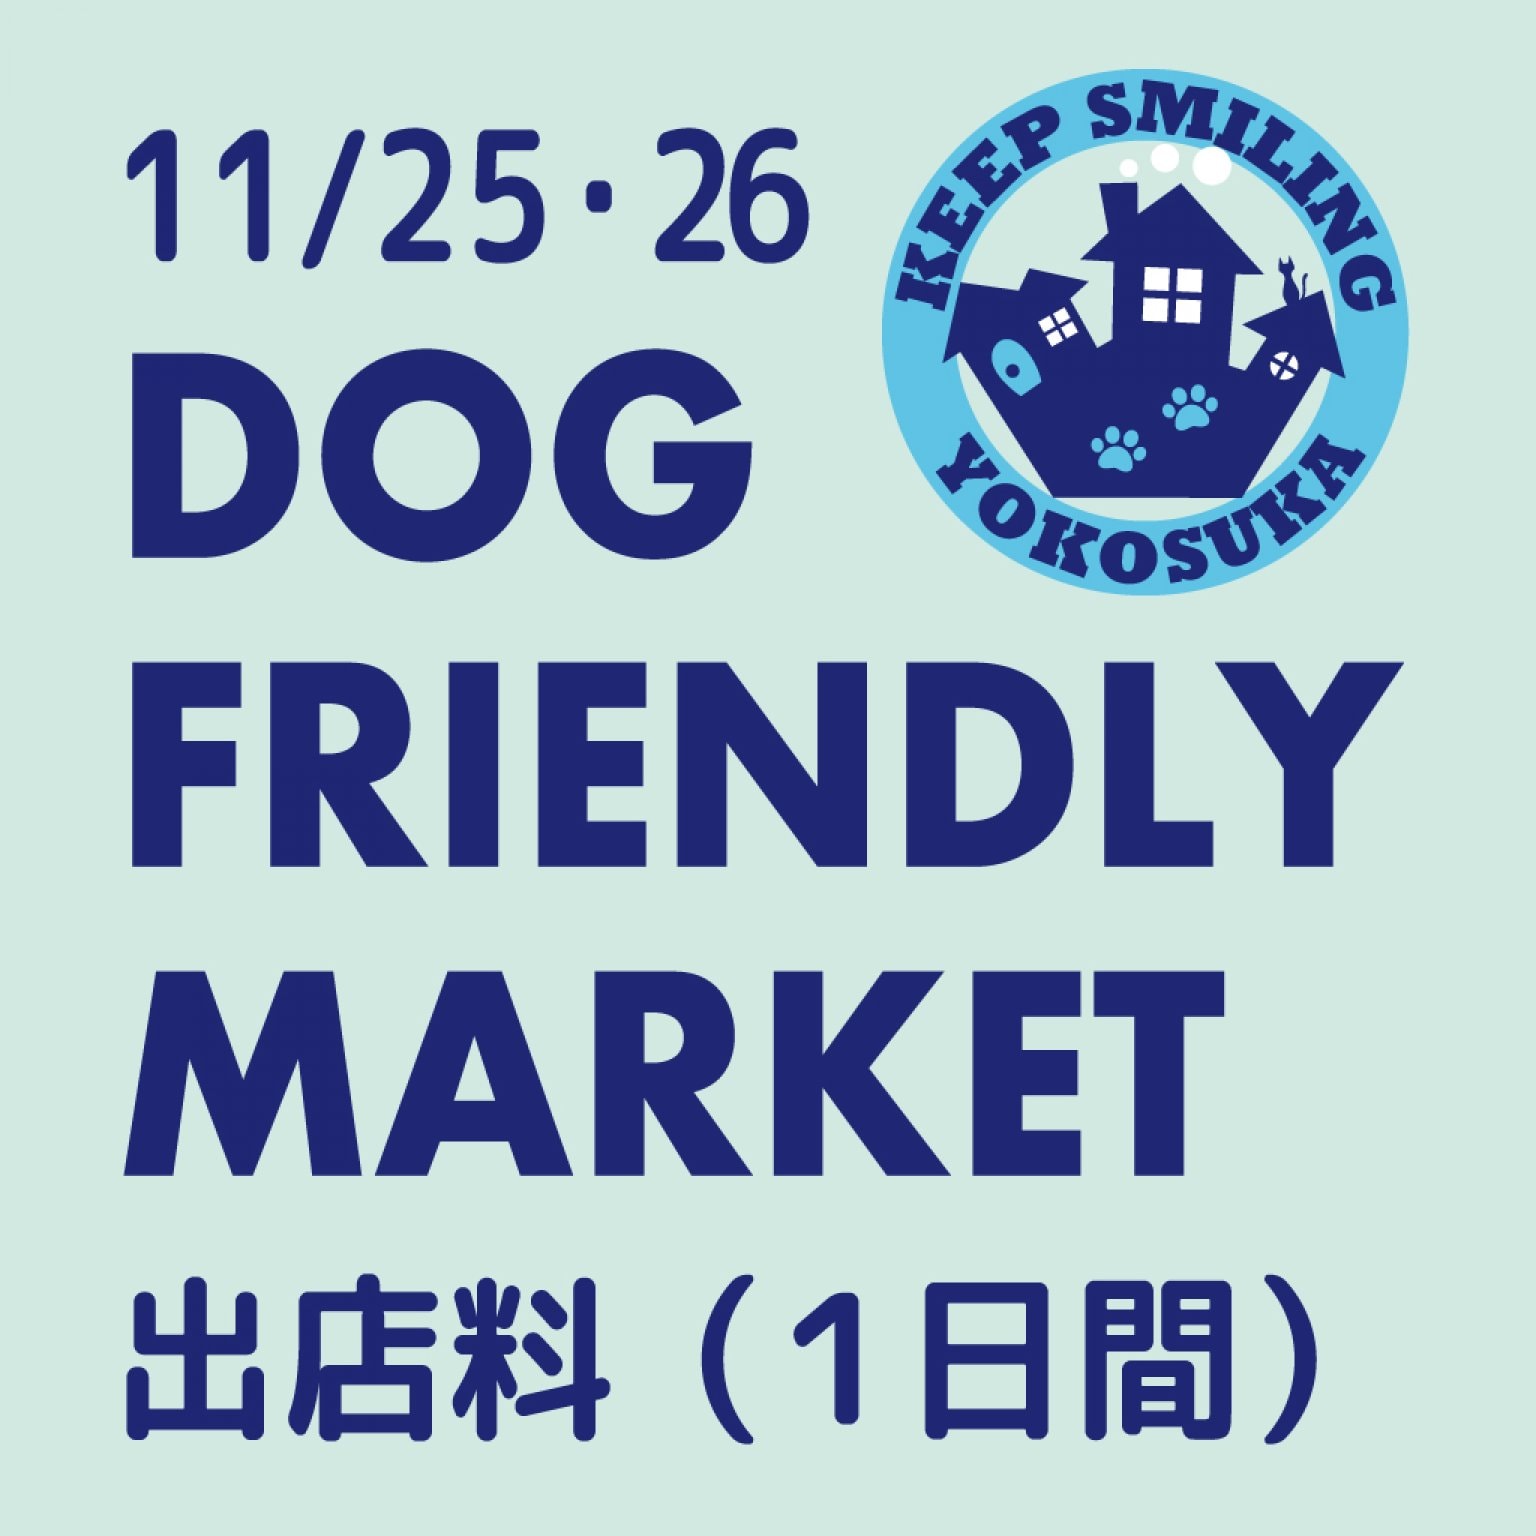 出店料１日間 DOG FRIENDLY MARKET 11/25・26